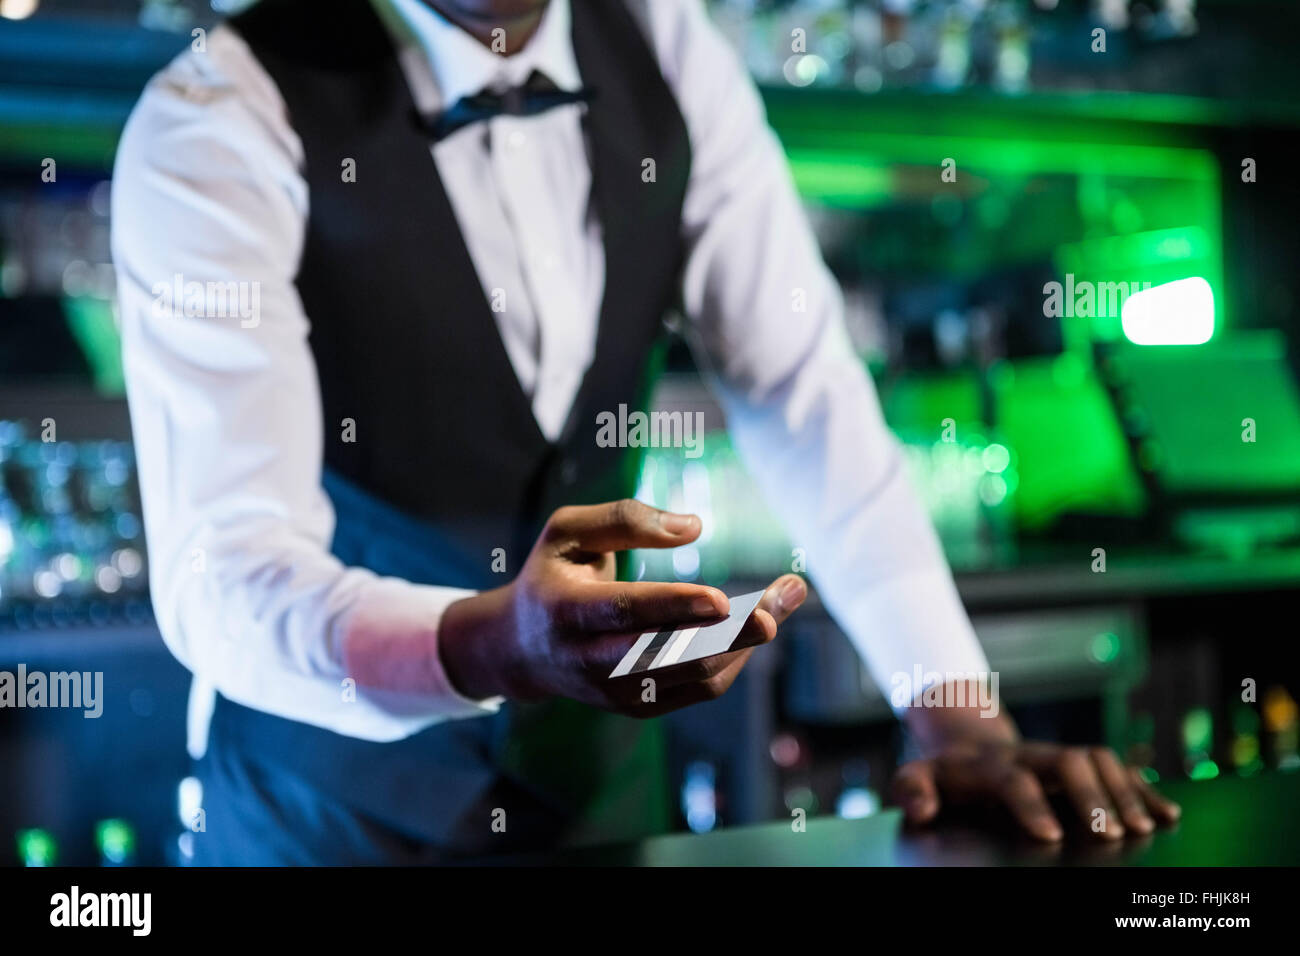 Bartender accepting a credit card at bar counter Stock Photo